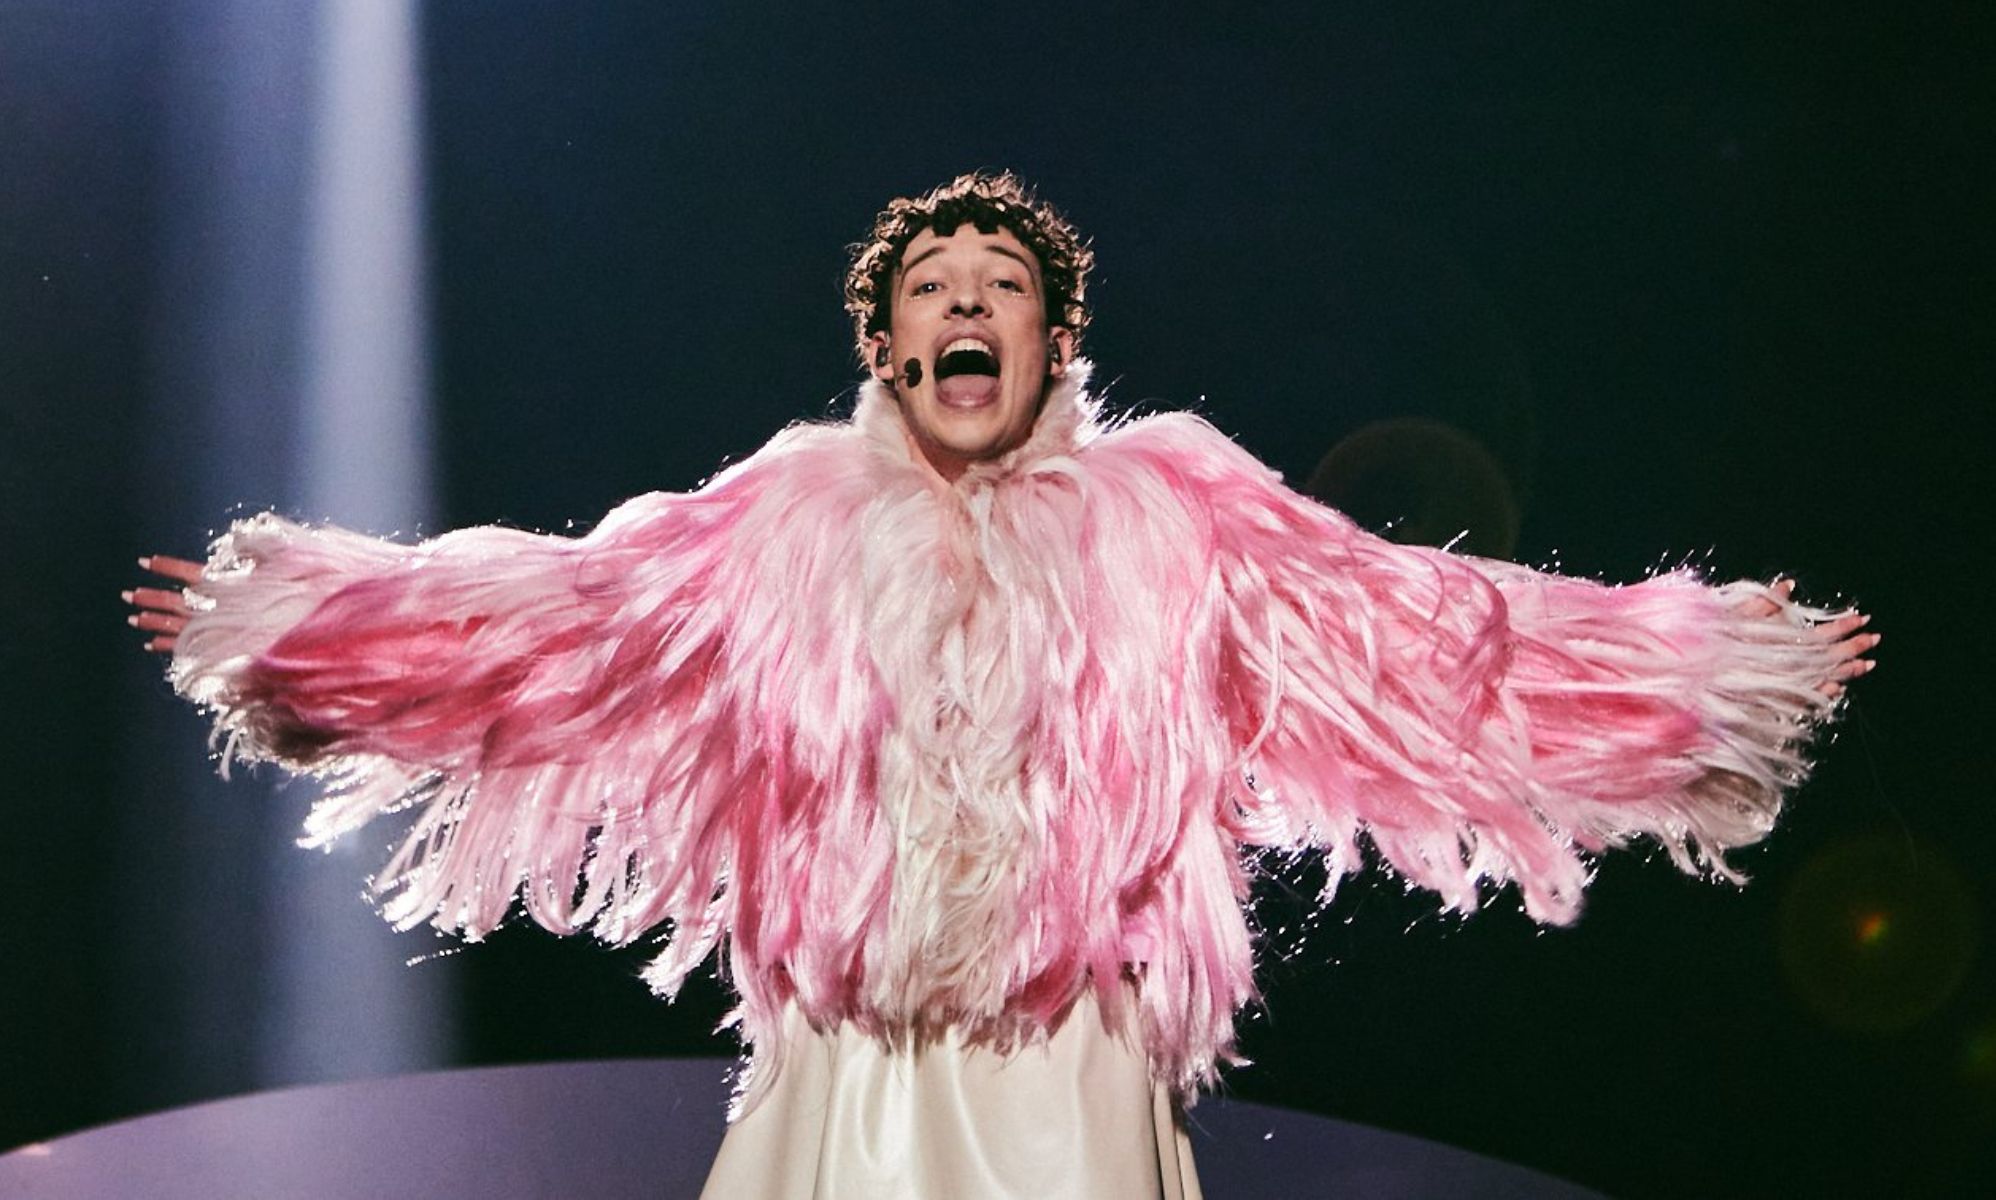 Eurovision Switzerland's Nemo on representing nonbinary people